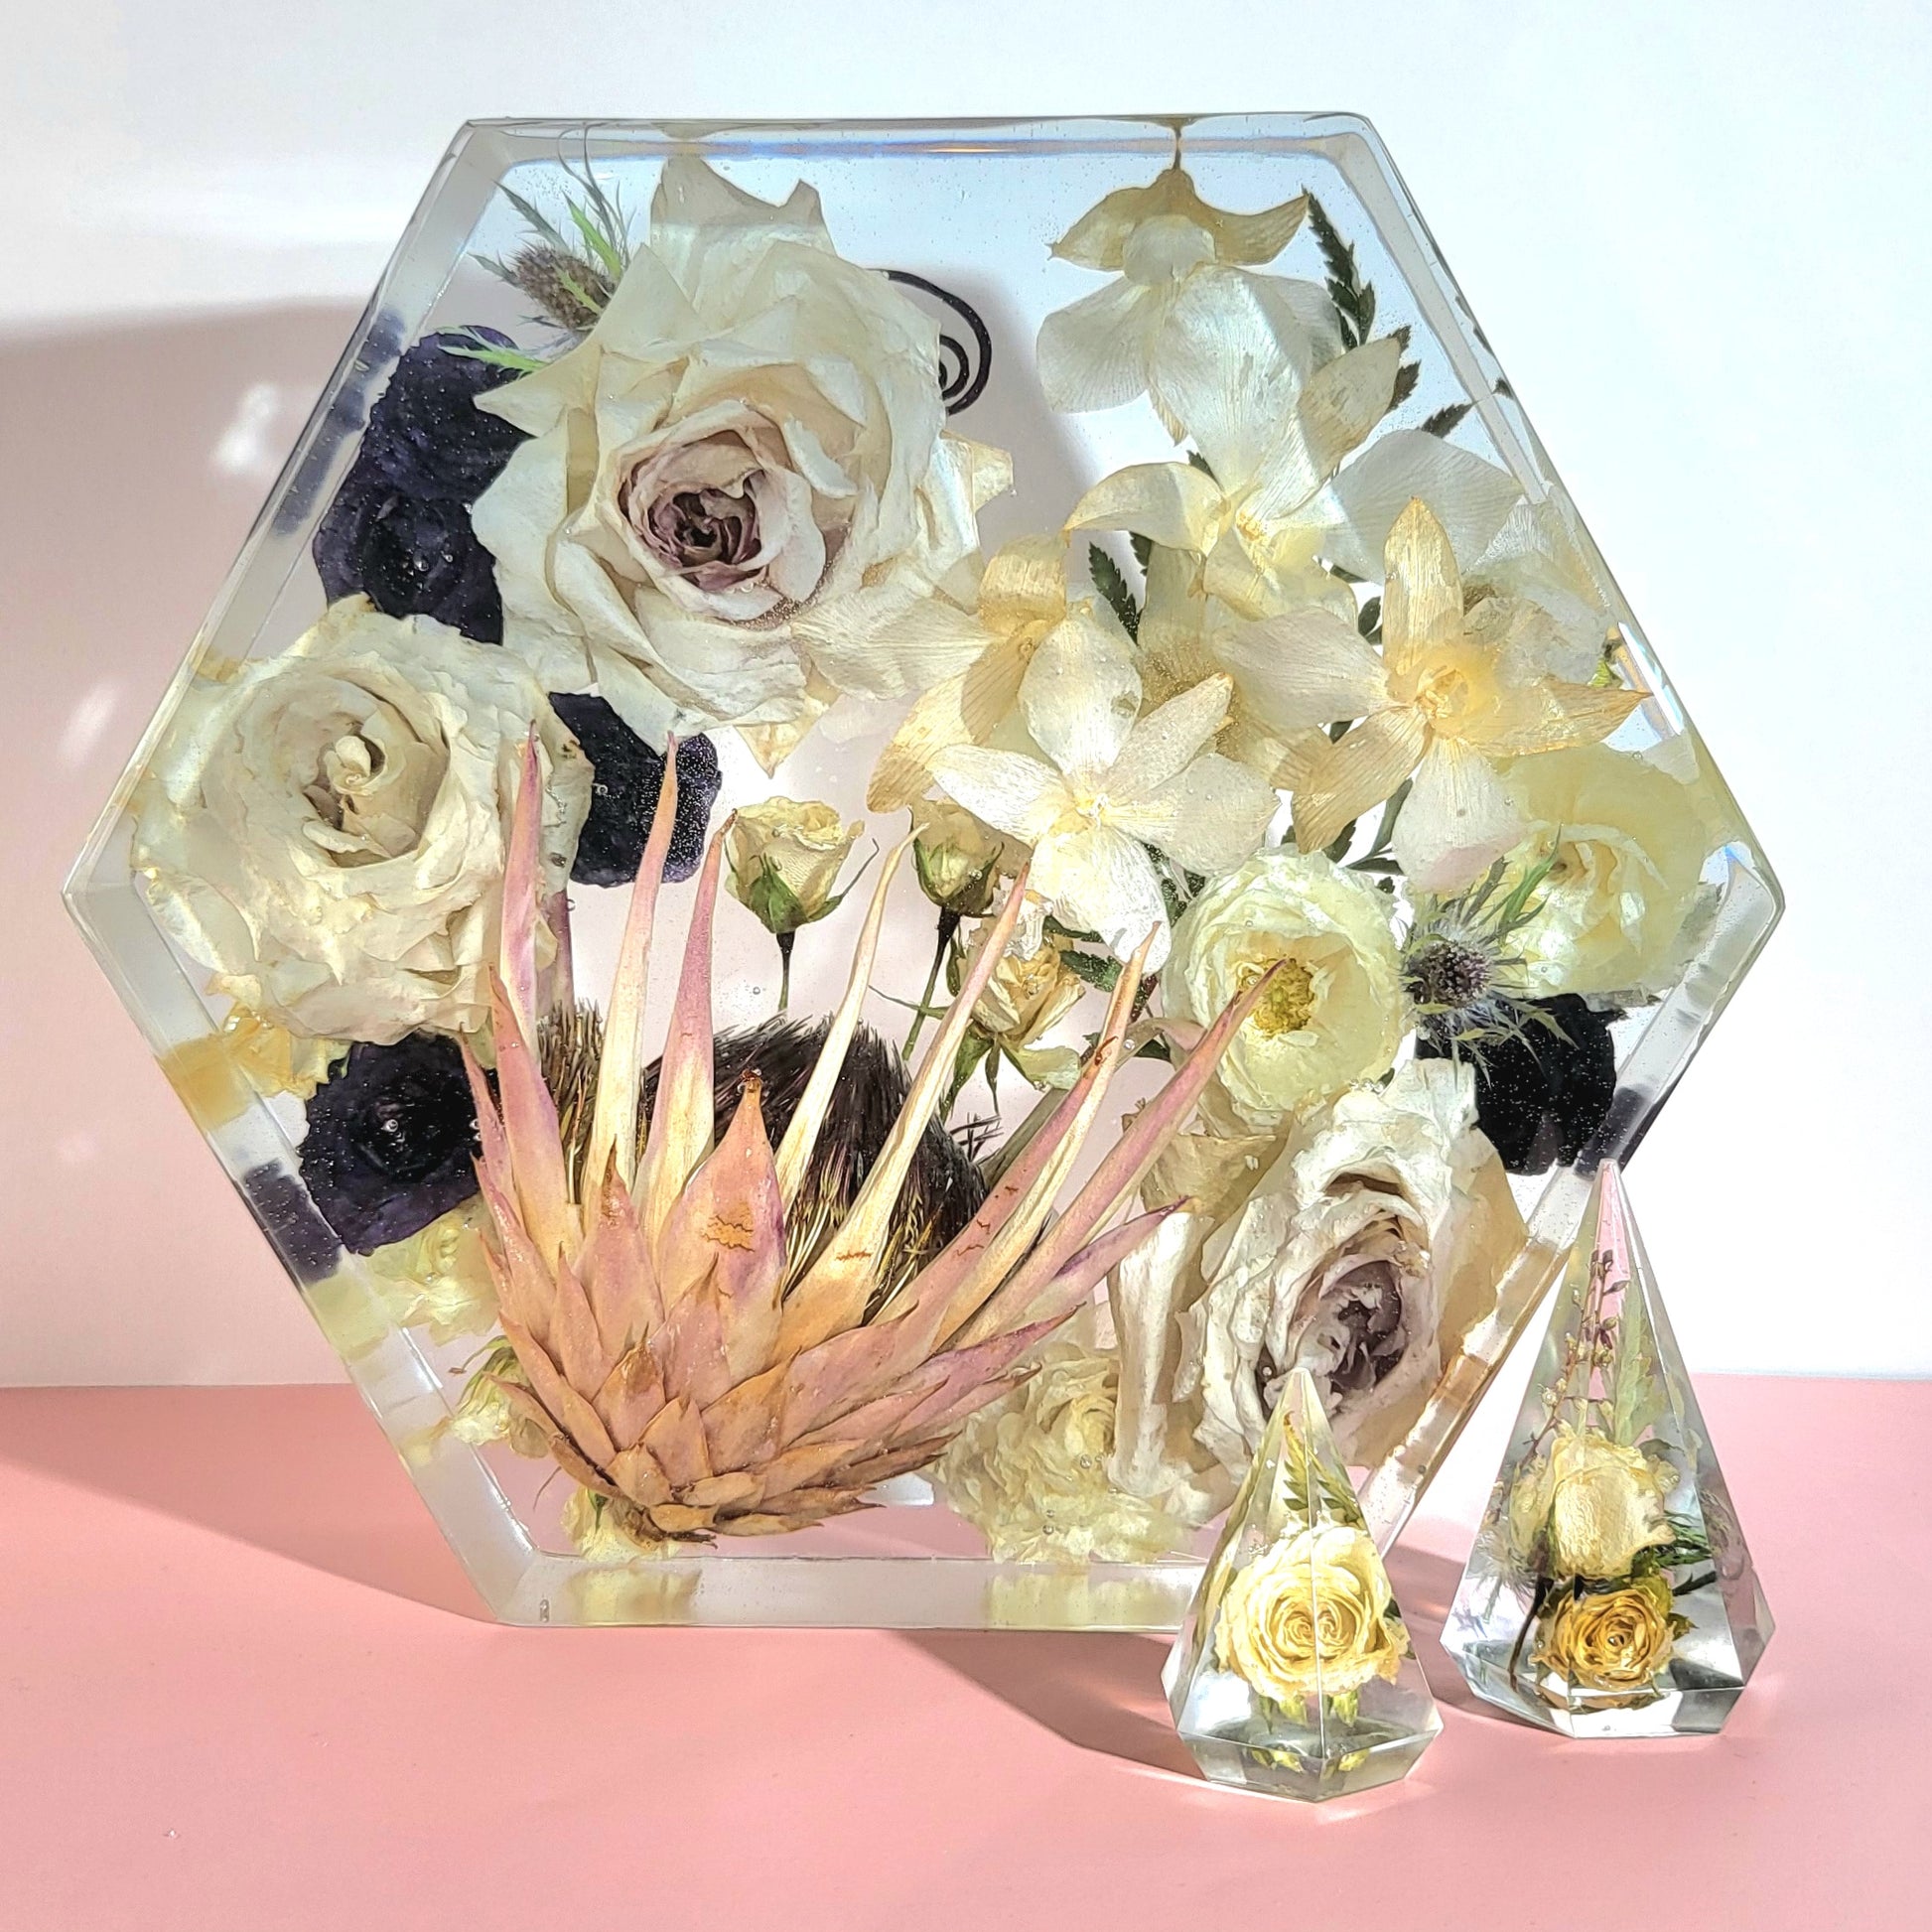 12" Semi Tropical Hexagon 3D Resin Wedding Bouquet Preservation Floral Gift Keepsake Save Your Wedding Flowers Forever - flofloflowery